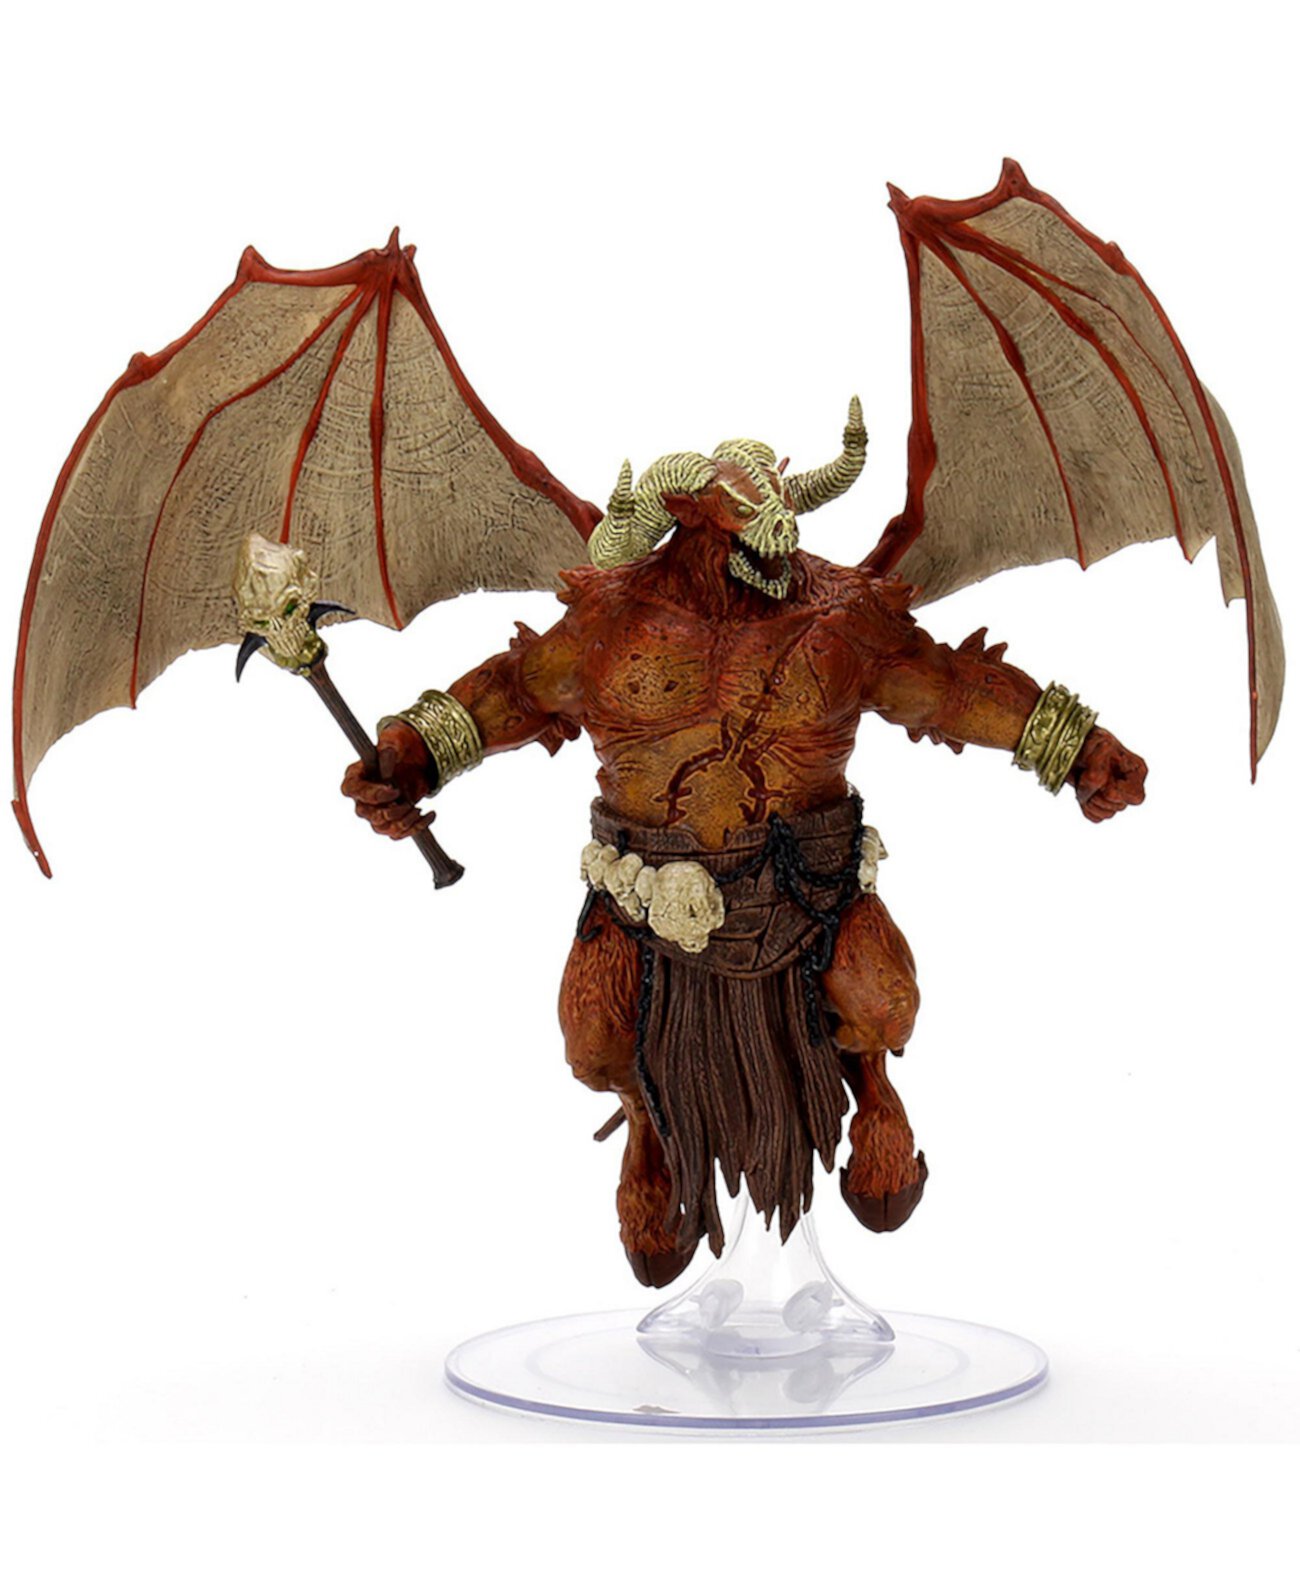 D D Icons of the Realms Demon Lord of Undeath Фигурка Orcus Demon Premium Предварительно окрашенная фигурка RPG Dungeons Dragons Dungeons & Dragons